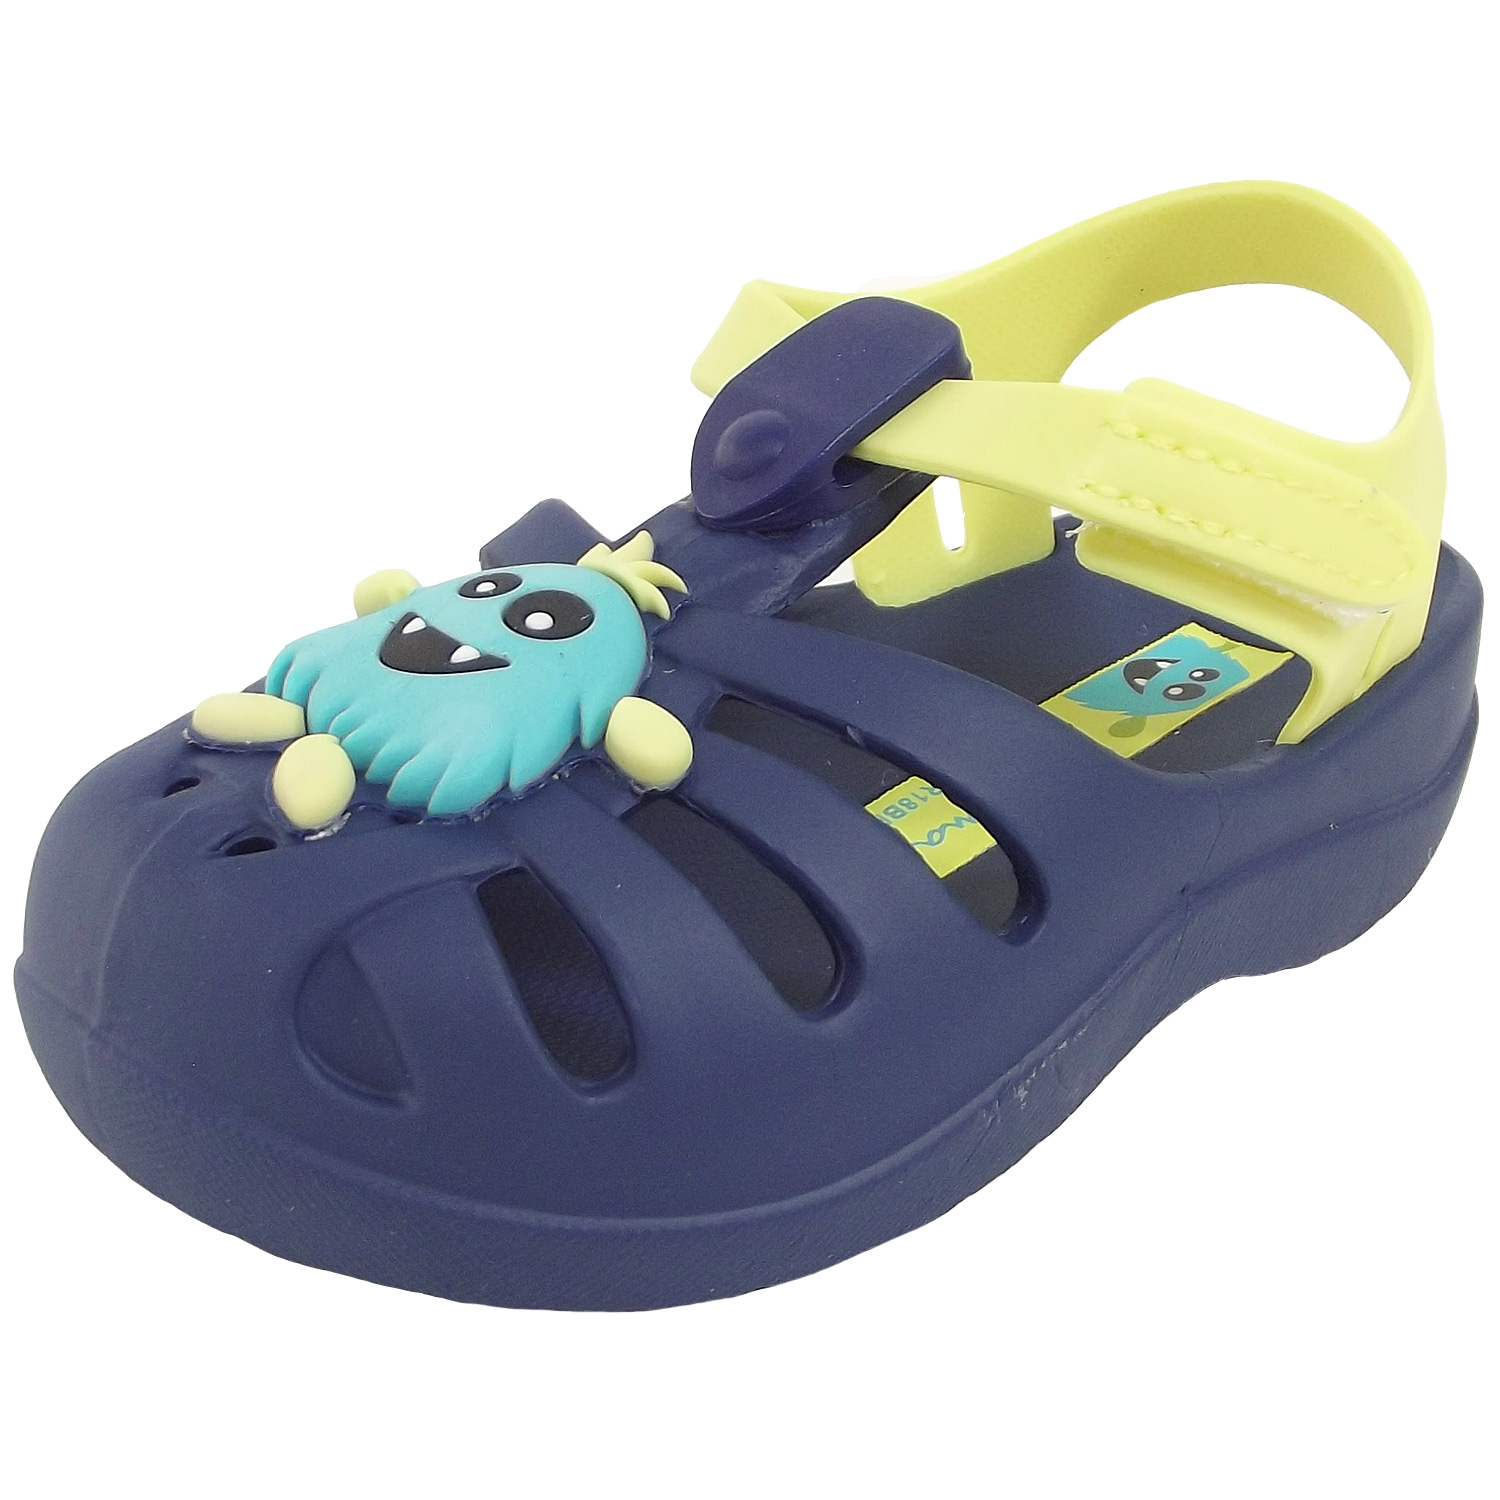 Ipanema Summer Baby Toddler Sandals 